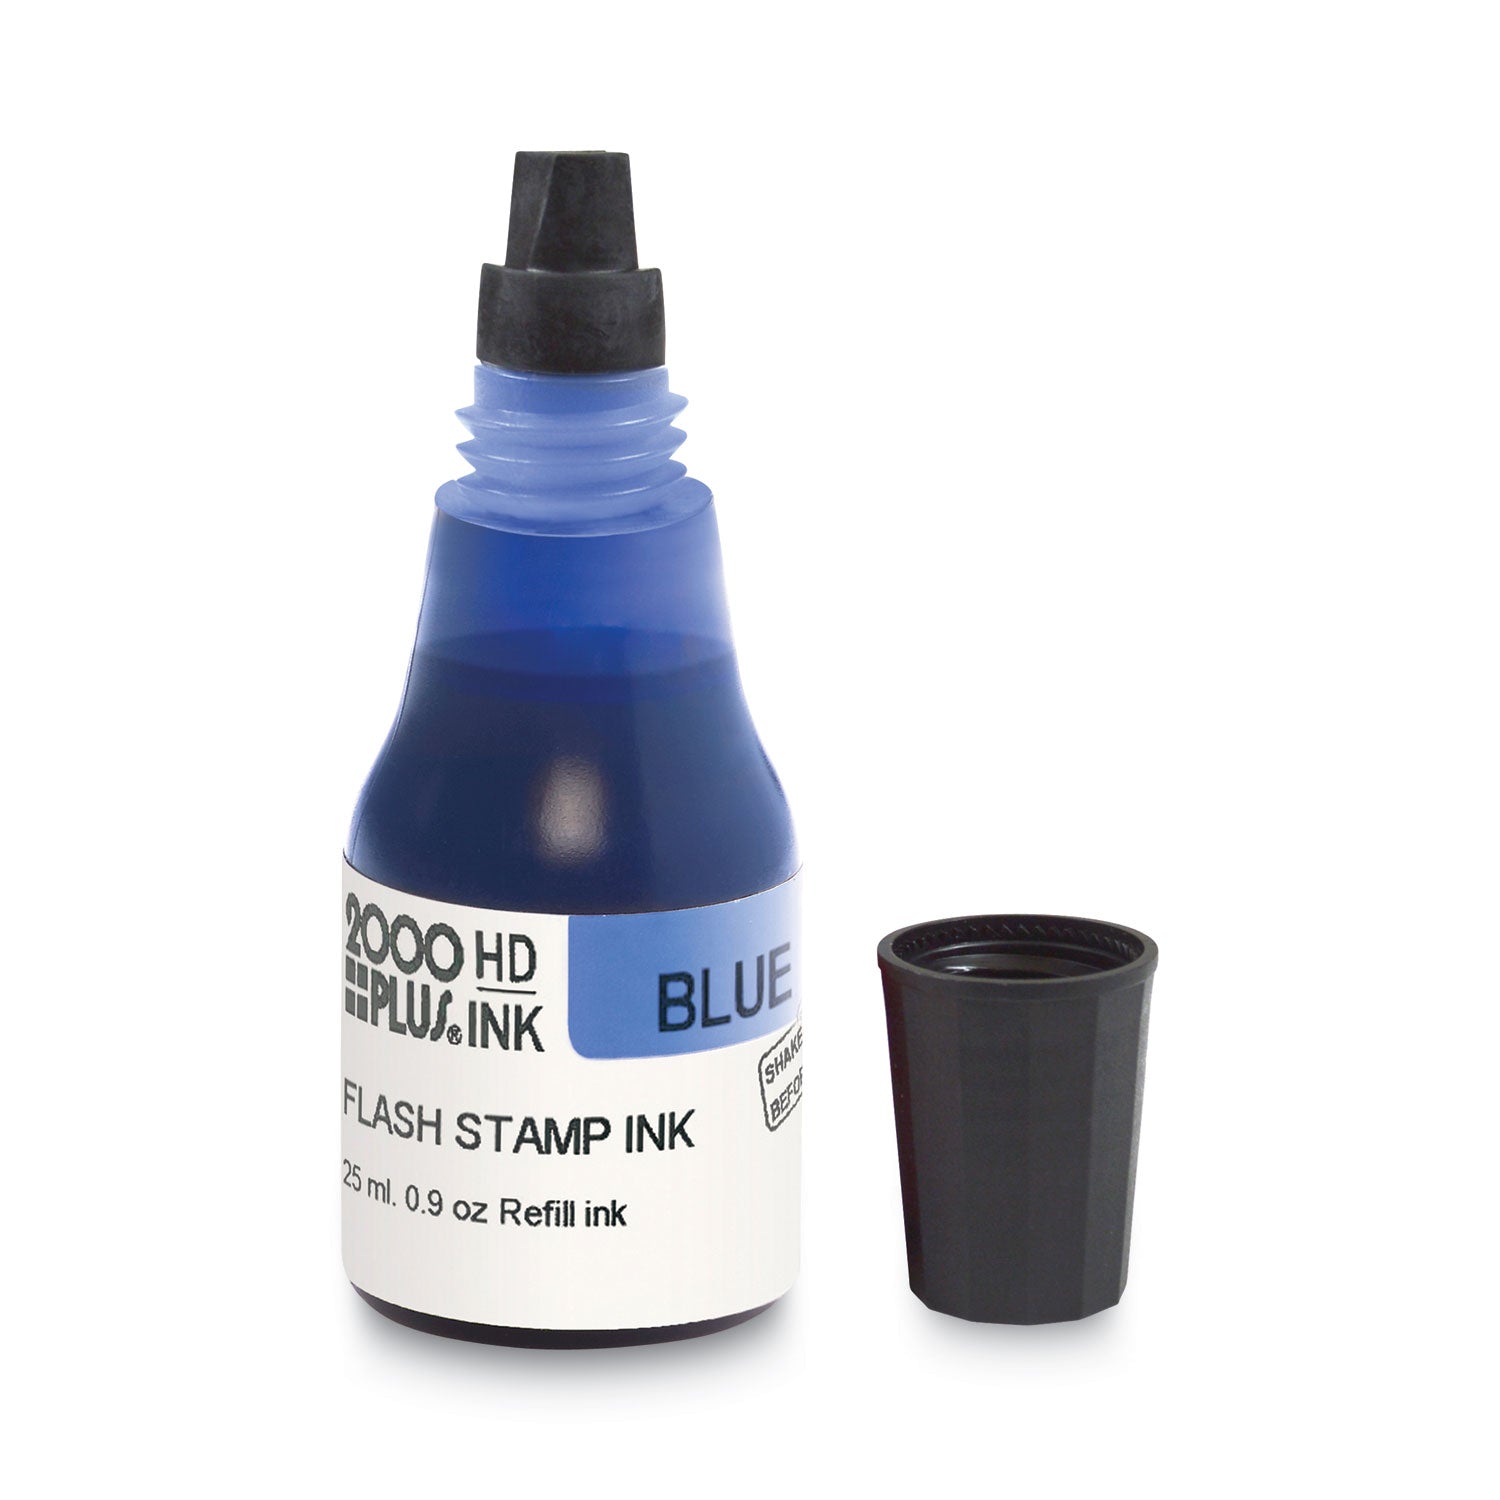 pre-ink-high-definition-refill-ink-blue-09-oz-bottle-blue_cos033959 - 2